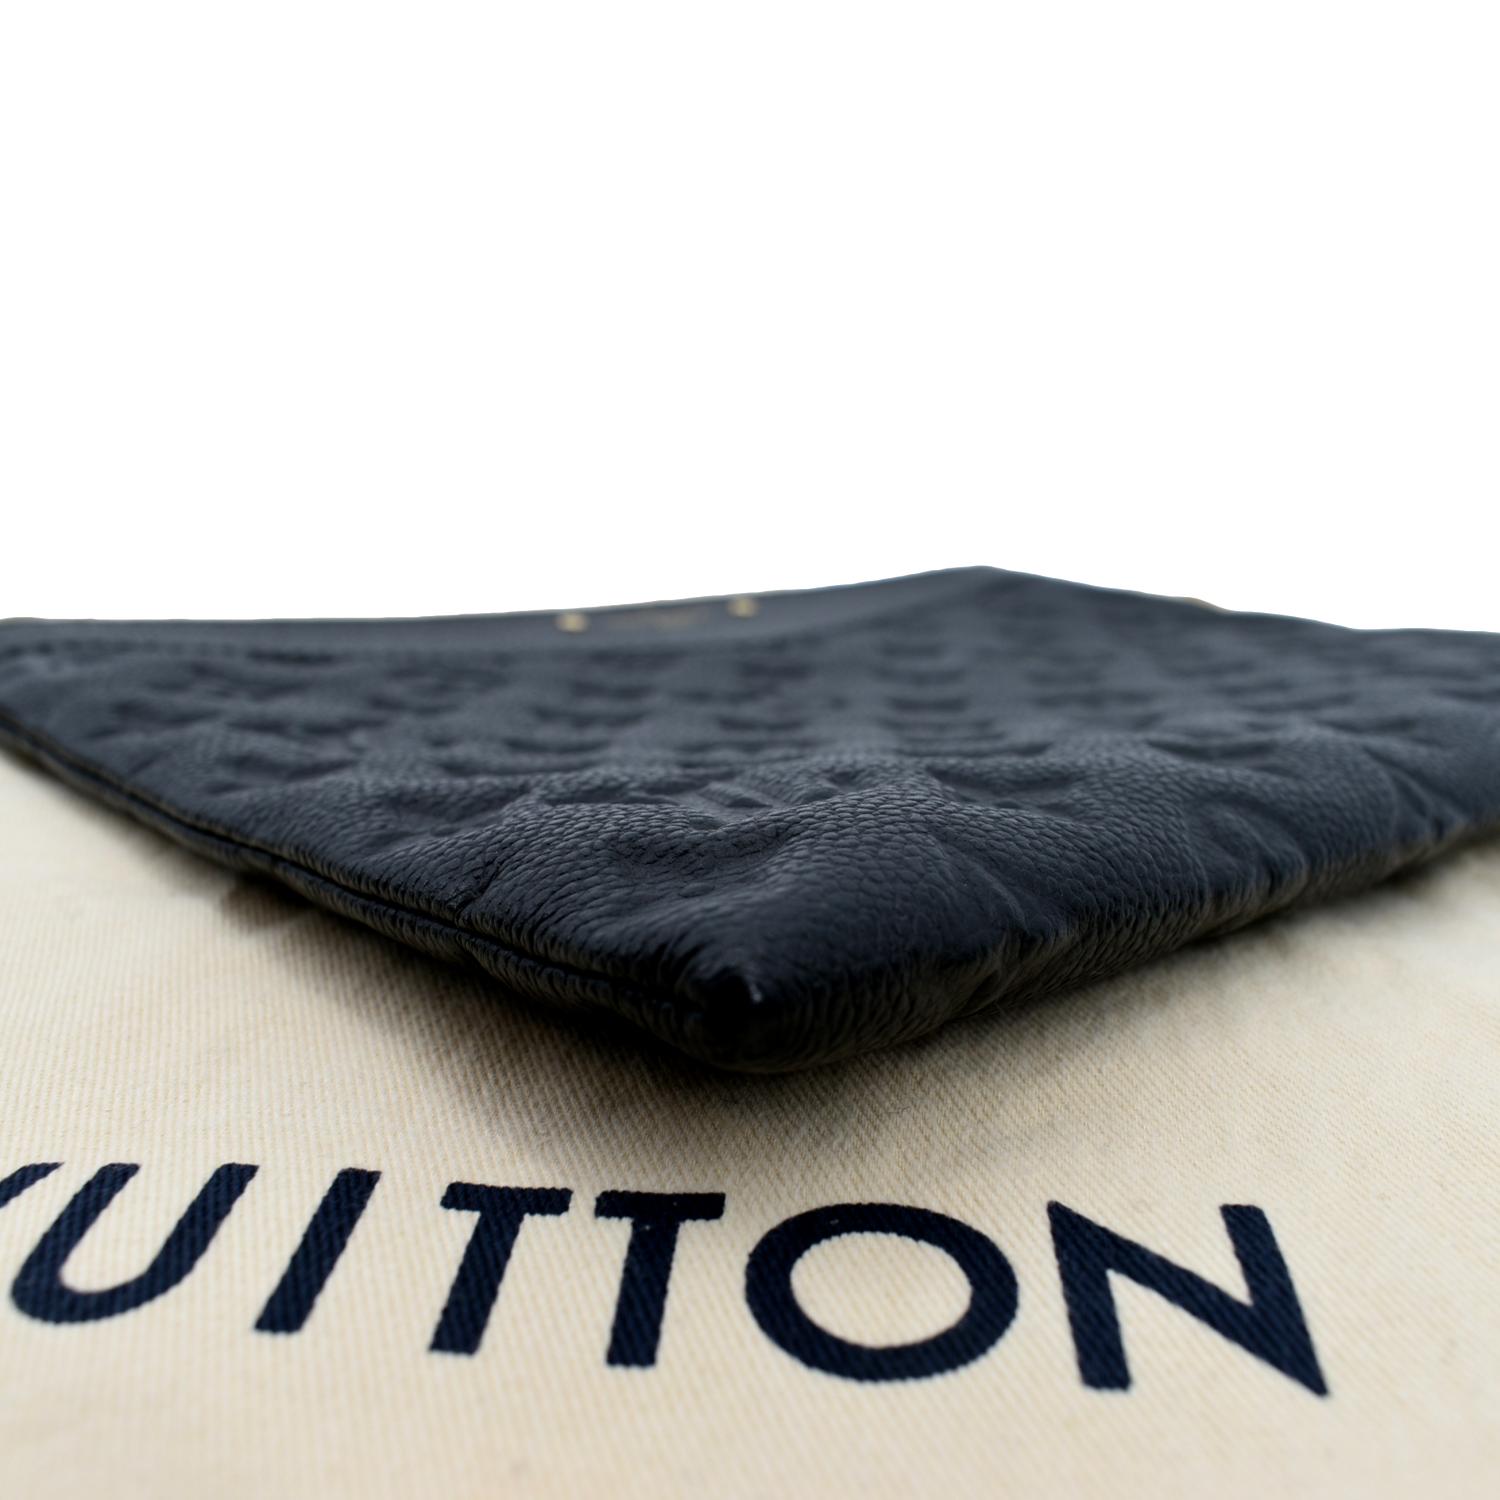 Louis Vuitton Daily Pouch (Black / Monogram)